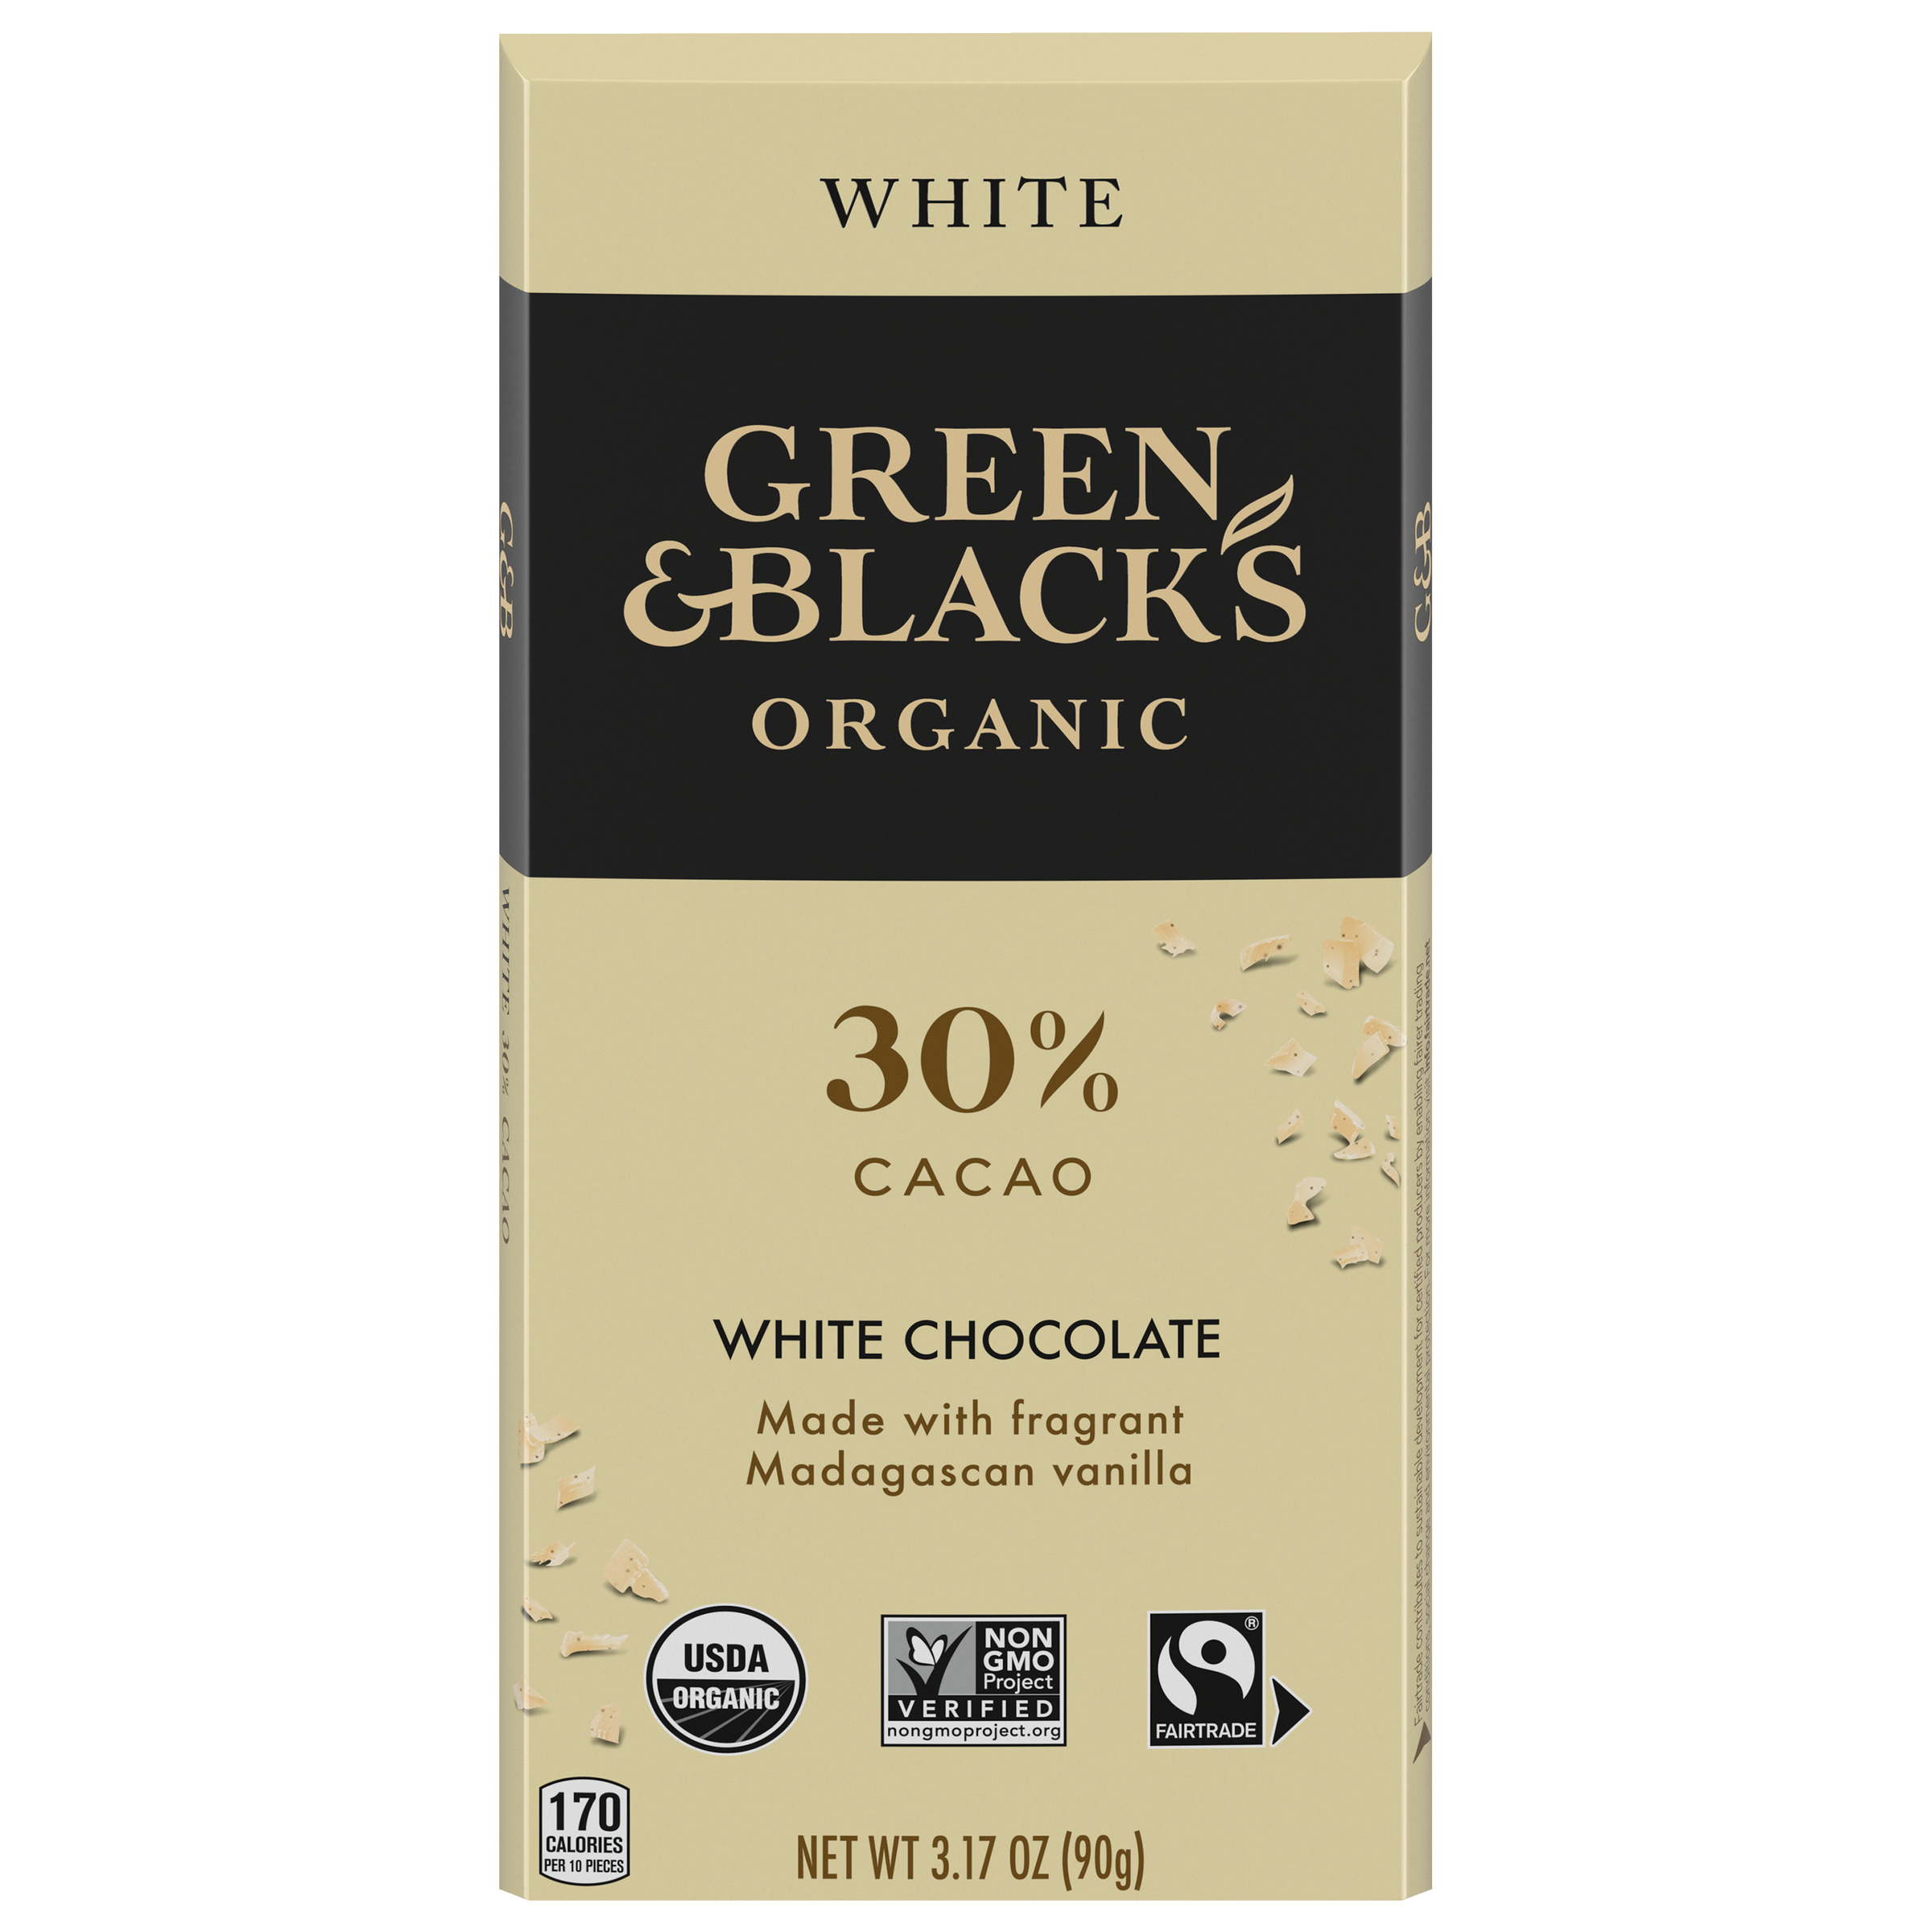 Green & Black's Organic White Chocolate Bar, 30% Cacao, 3.17 oz